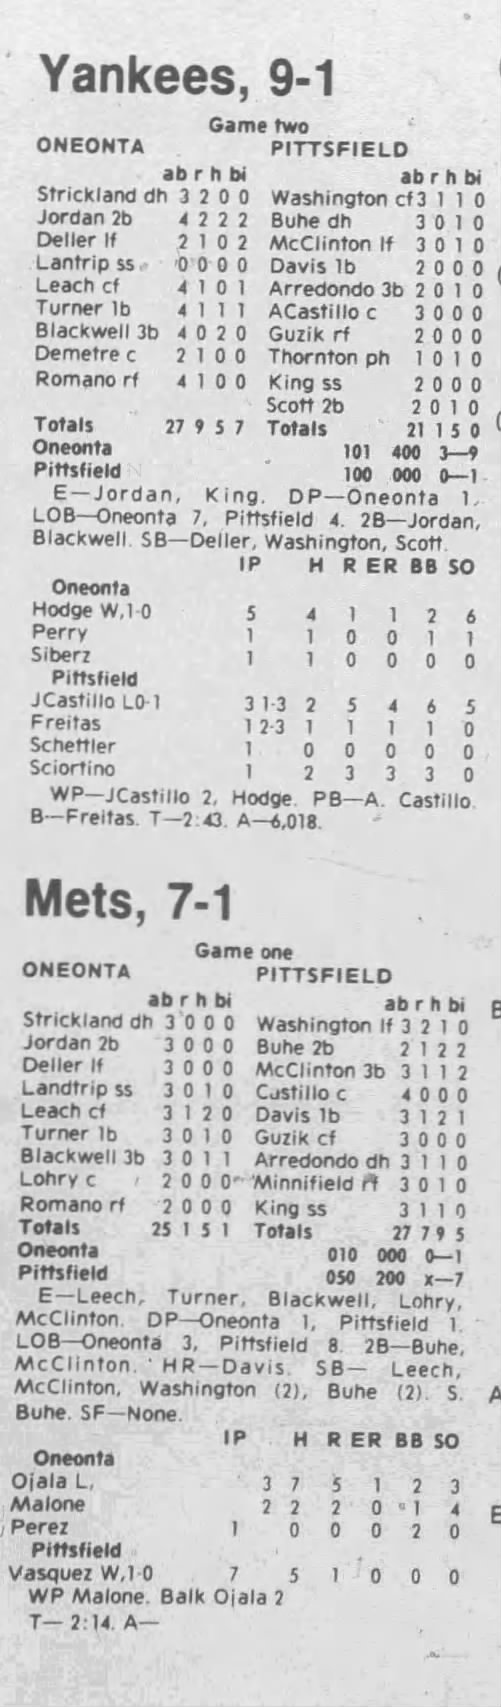 Pittsfield Mets - June 21, 1990